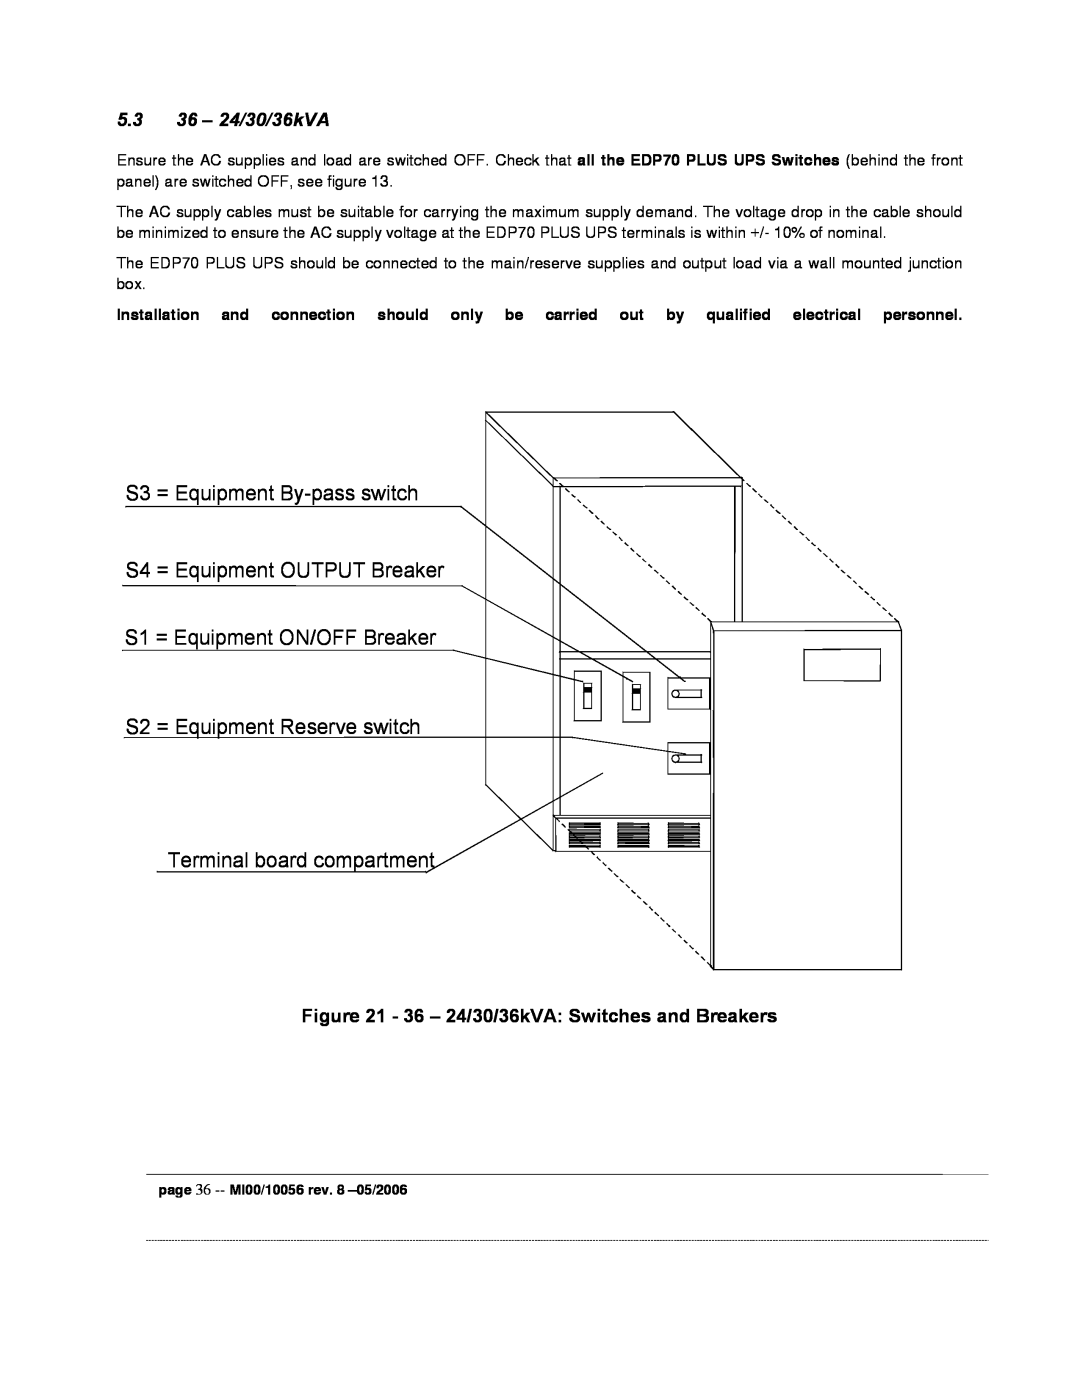 Garmin EDP70 manual = Equipment By-pass switch, = Equipment OUTPUT Breaker, S1 = Equipment ON/OFF Breaker 